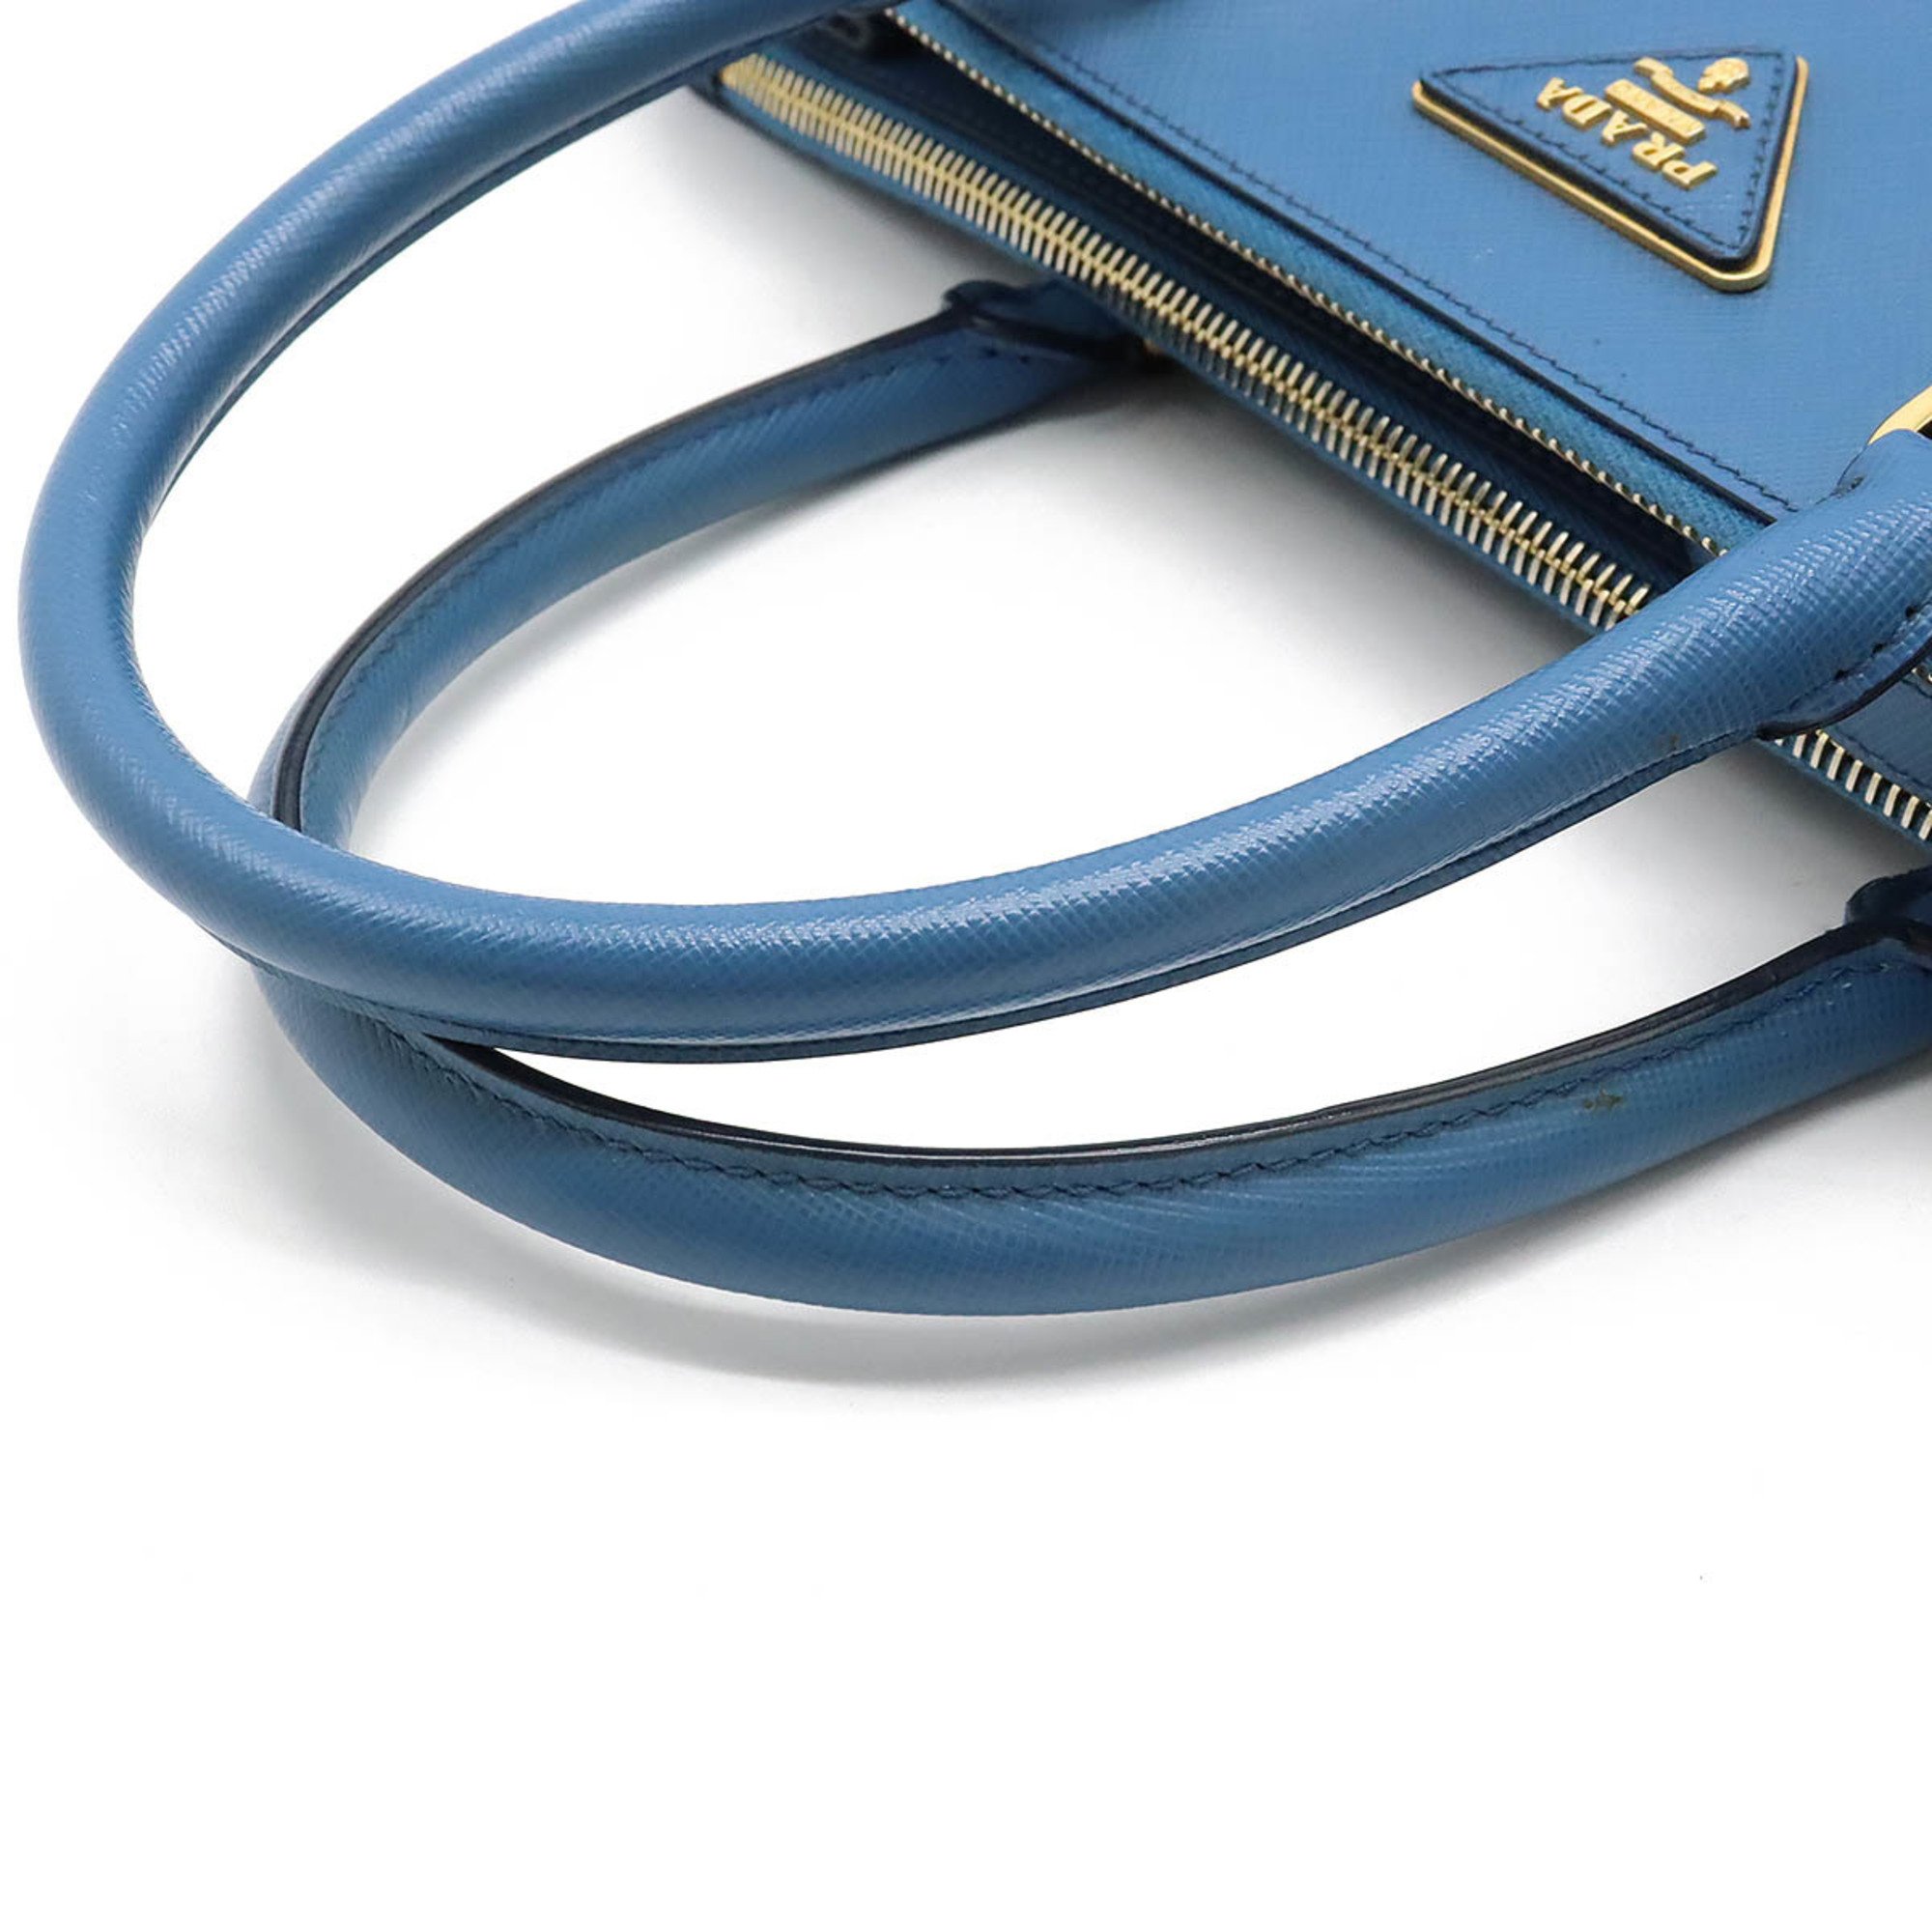 PRADA Prada Galleria Tote Bag Shoulder Leather Bicolor Blue Navy B1786S